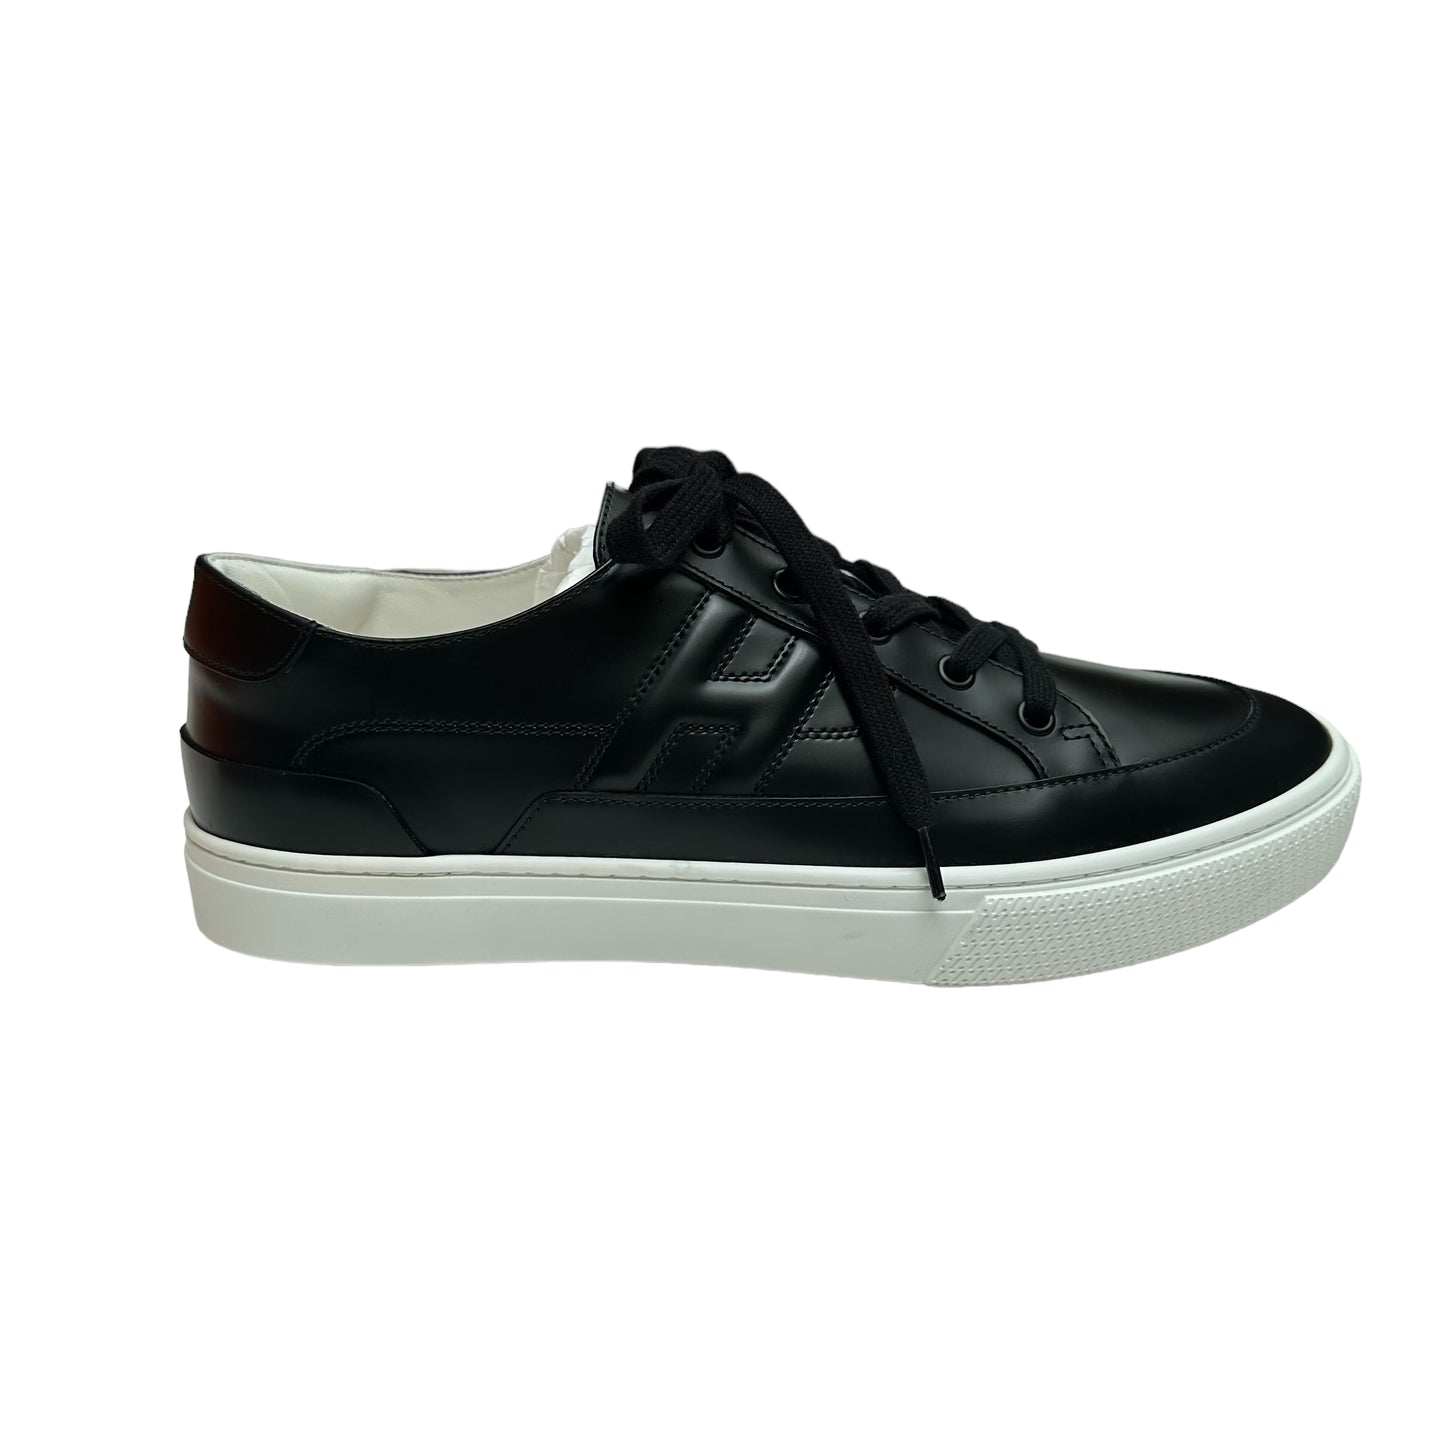 Men's Black Leather Sneakers - 42